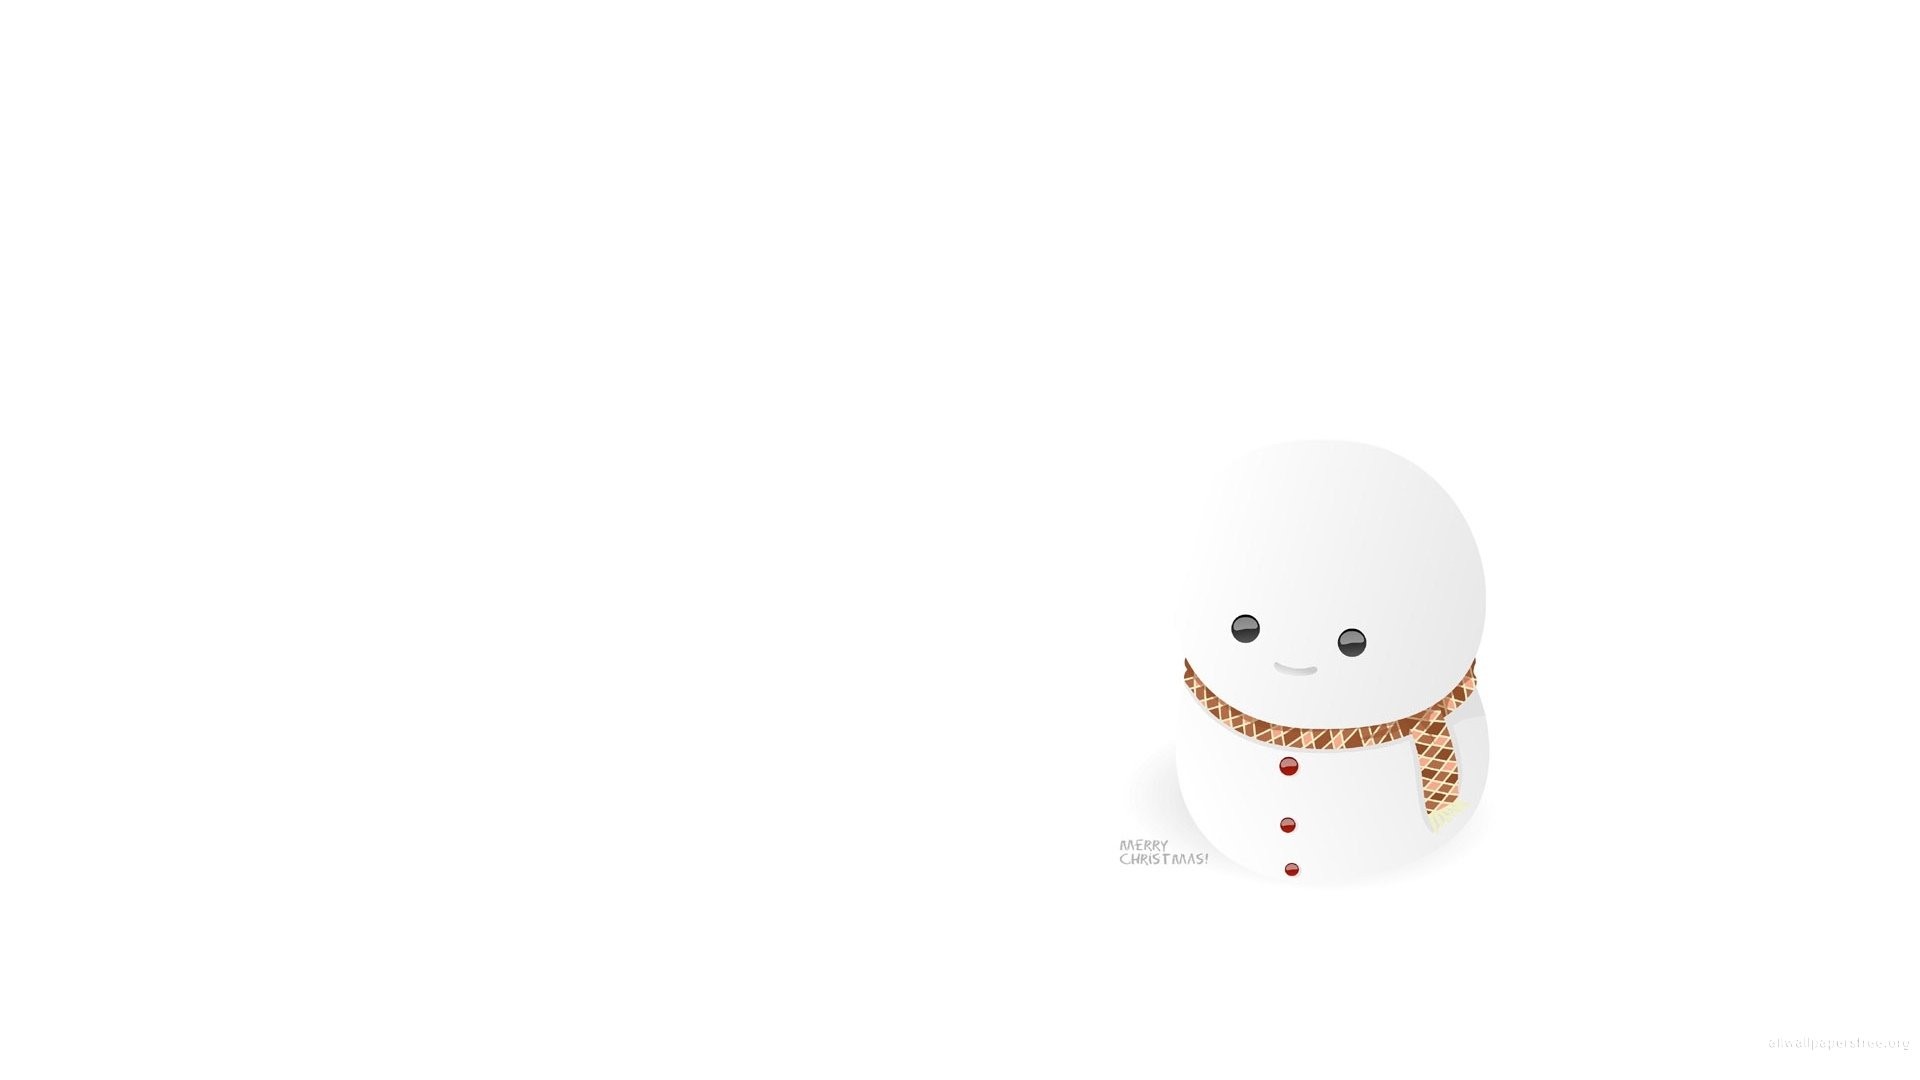 General 1920x1080 minimalism white background Christmas snowman simple background text digital art